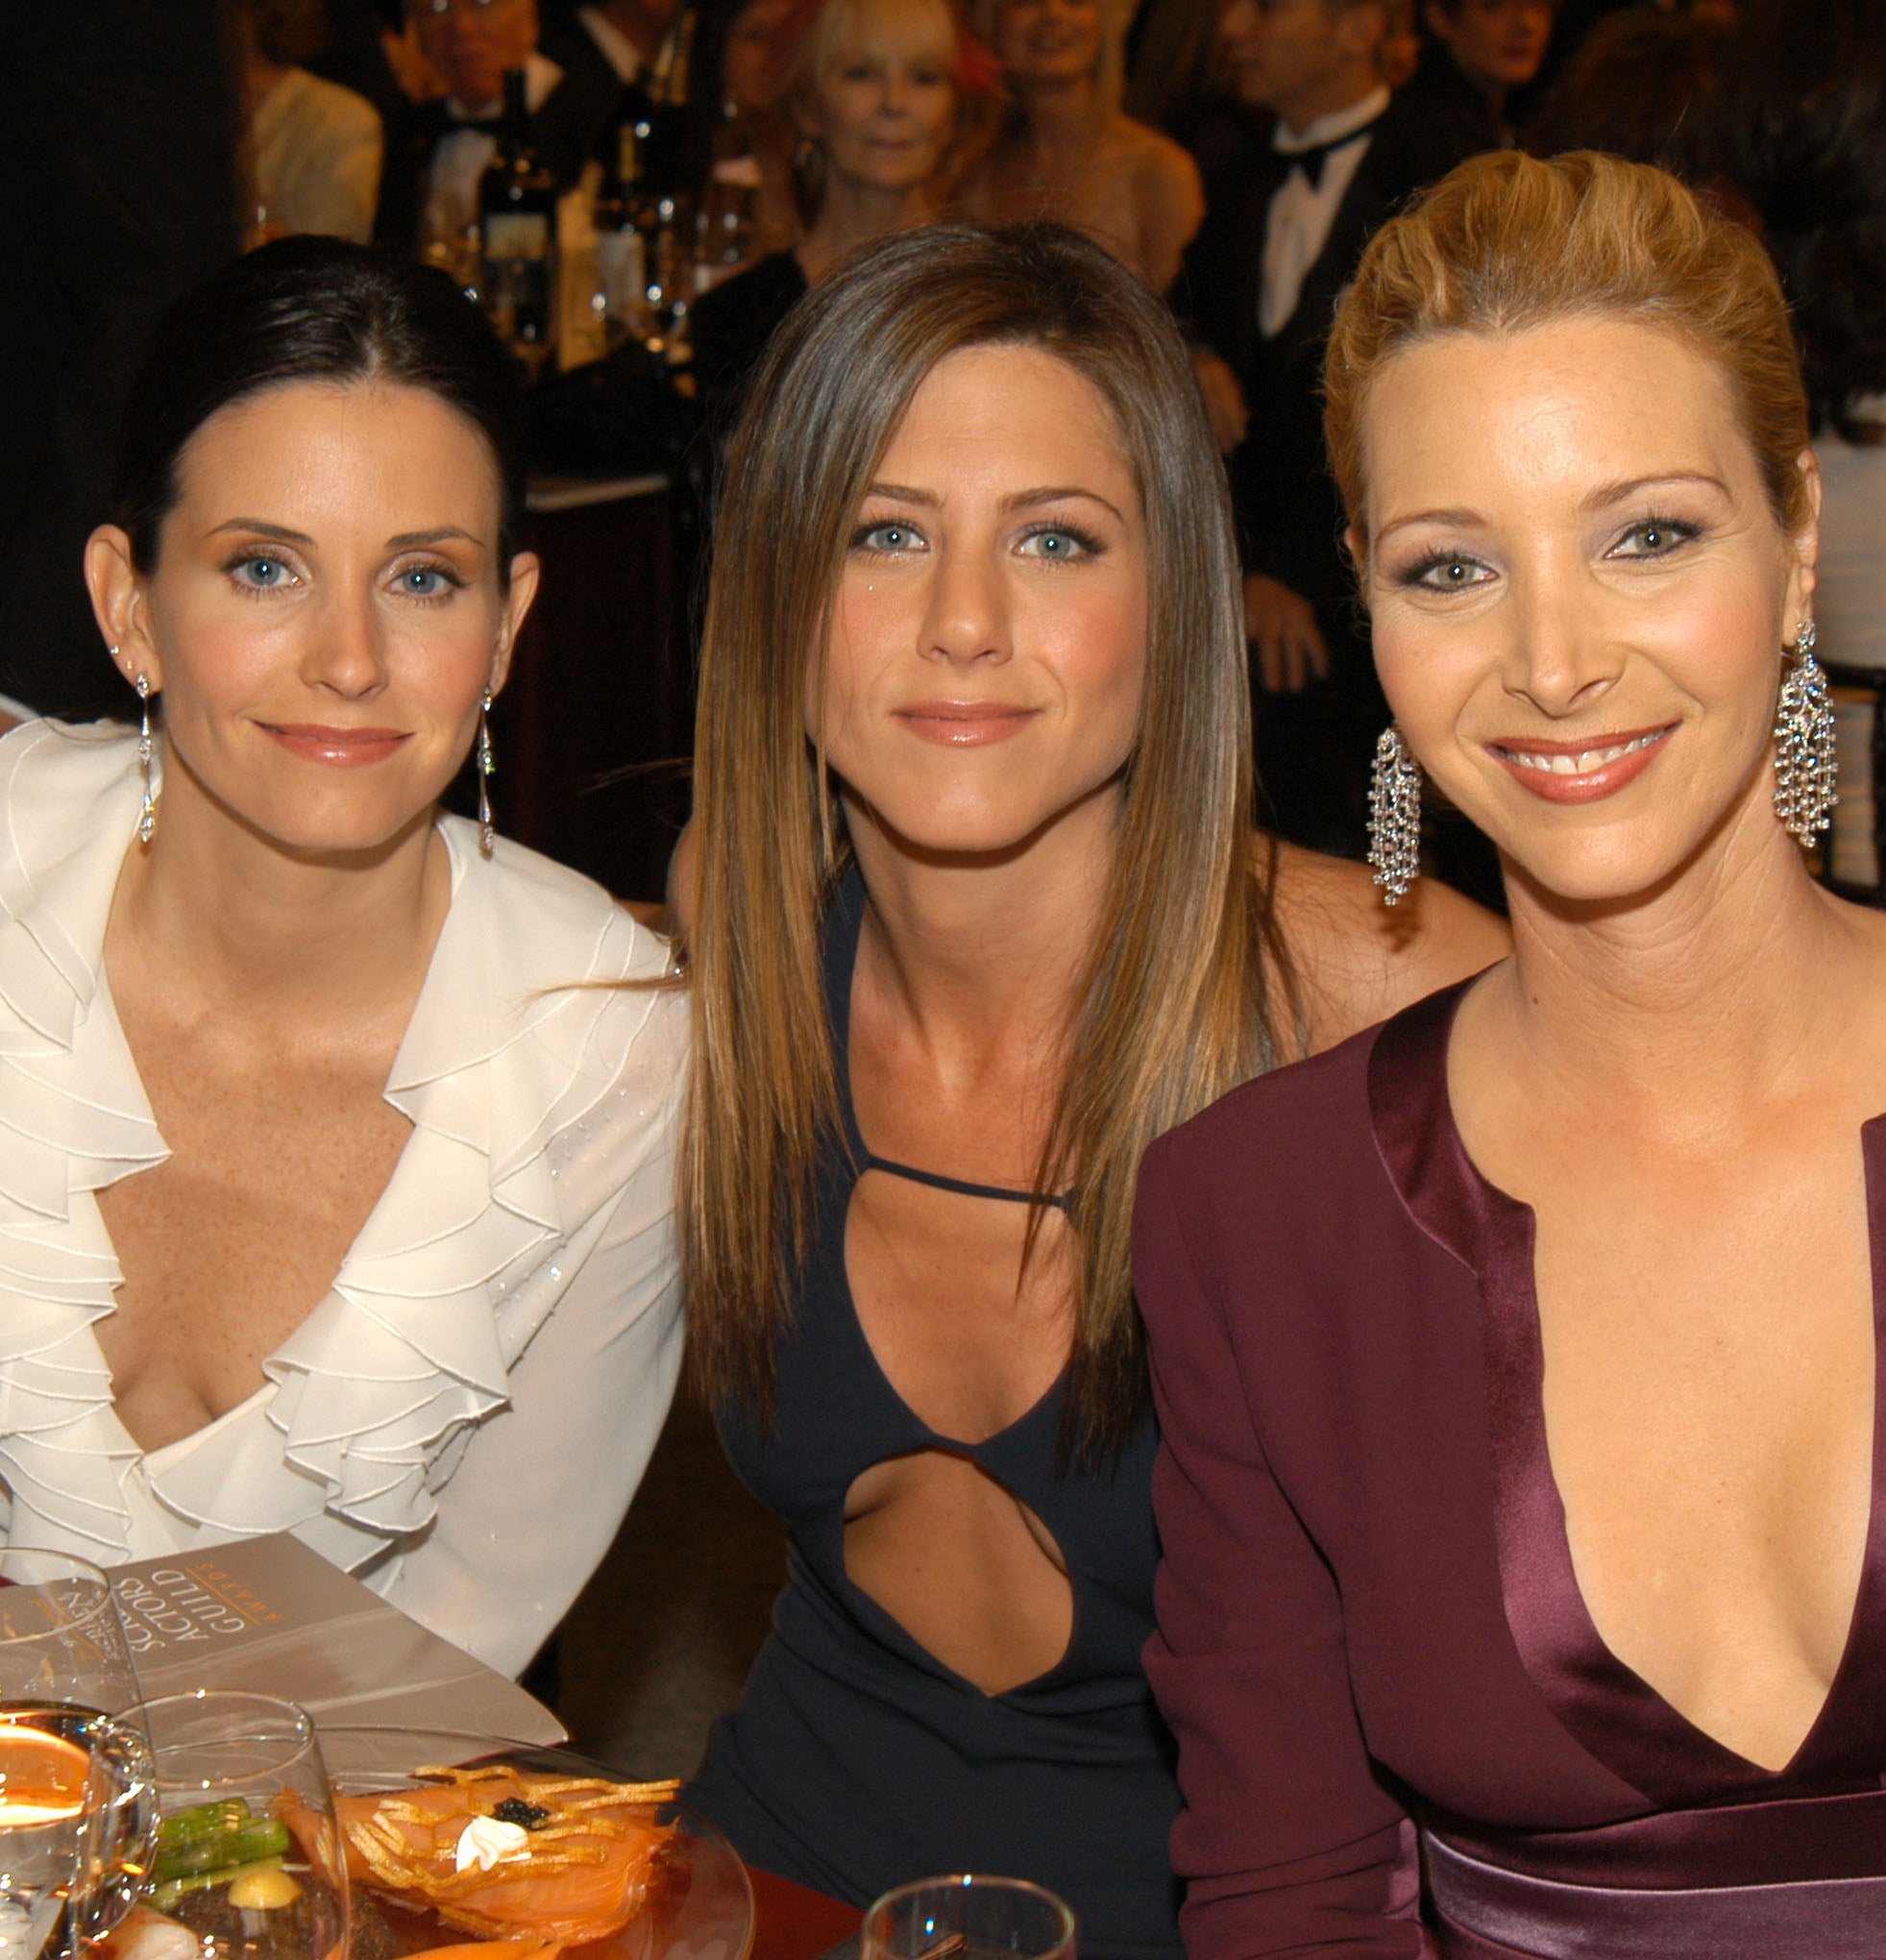 Close-up of Courteney, Jennifer, and Lisa sitting together